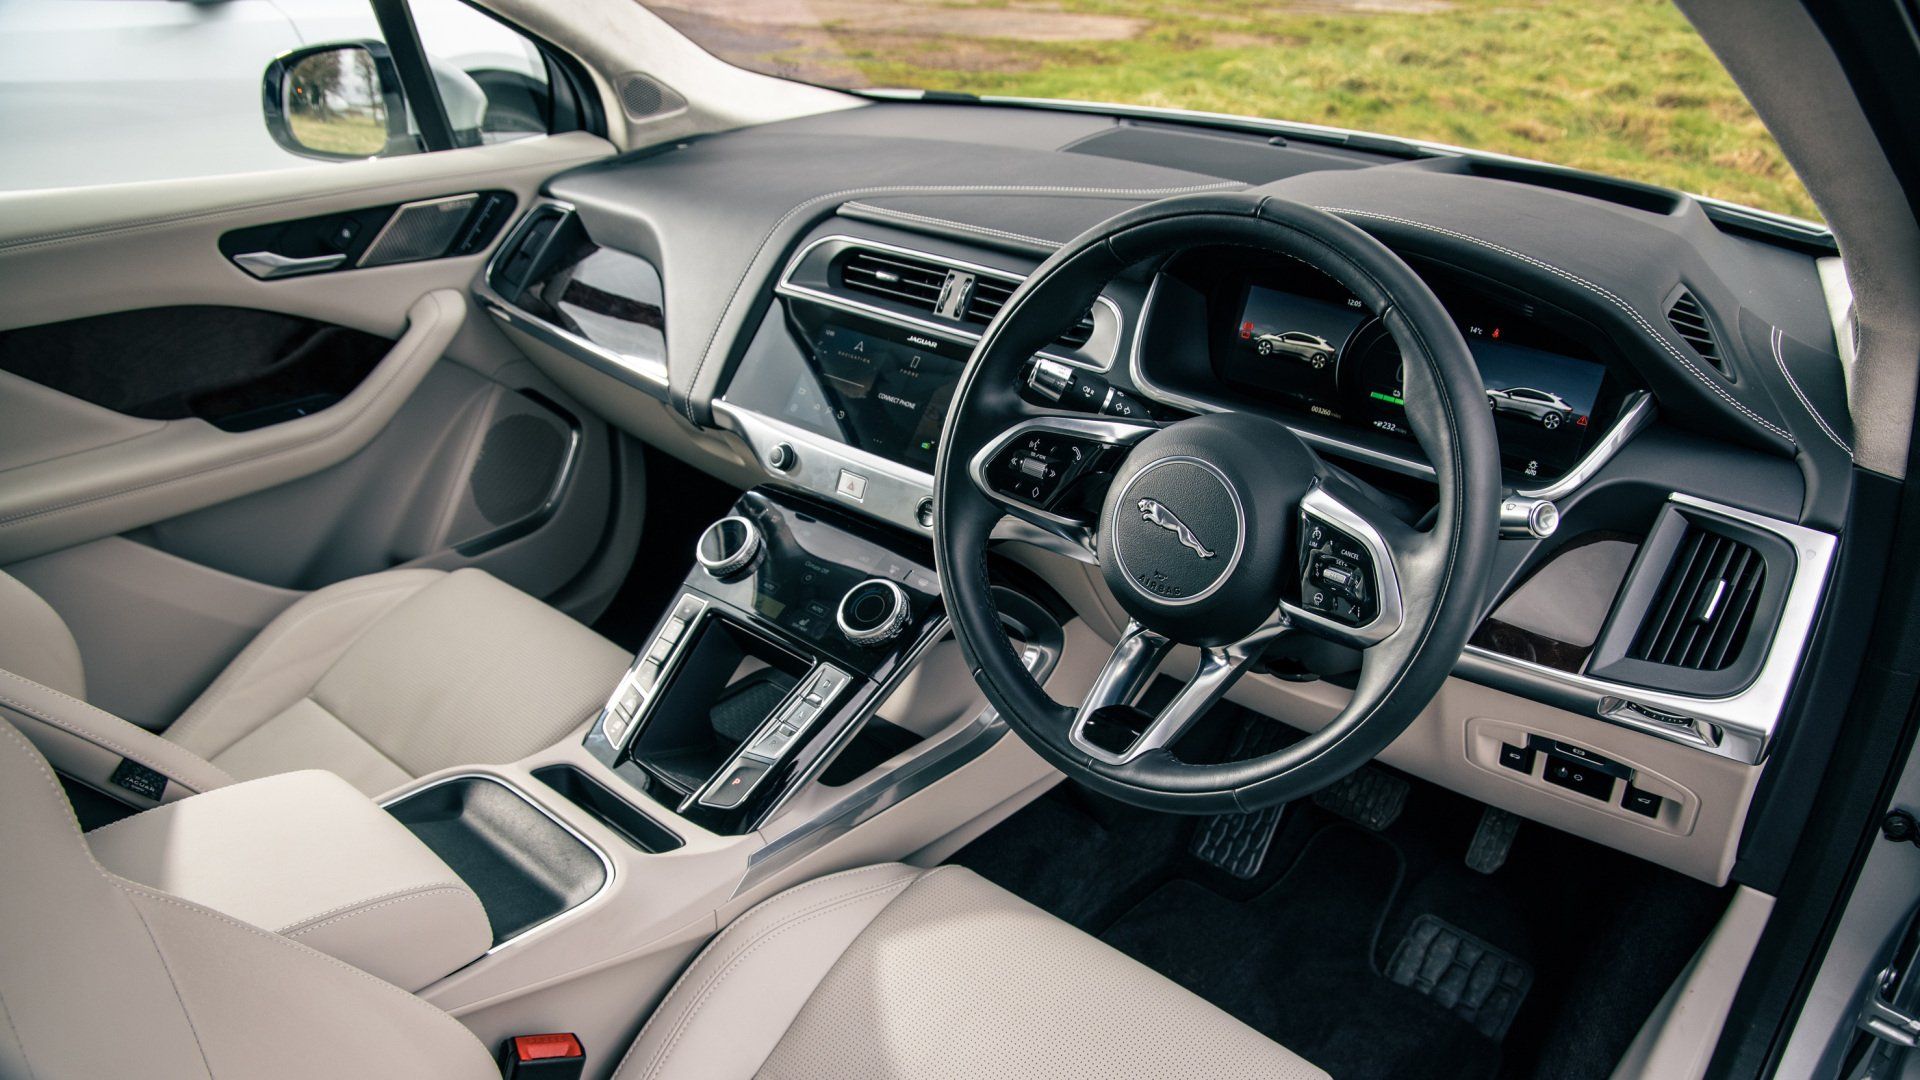 Mercedes-AMG-S63-Plug-in-Hybrid-Vehicle-interior-2-car-charger-uk-news